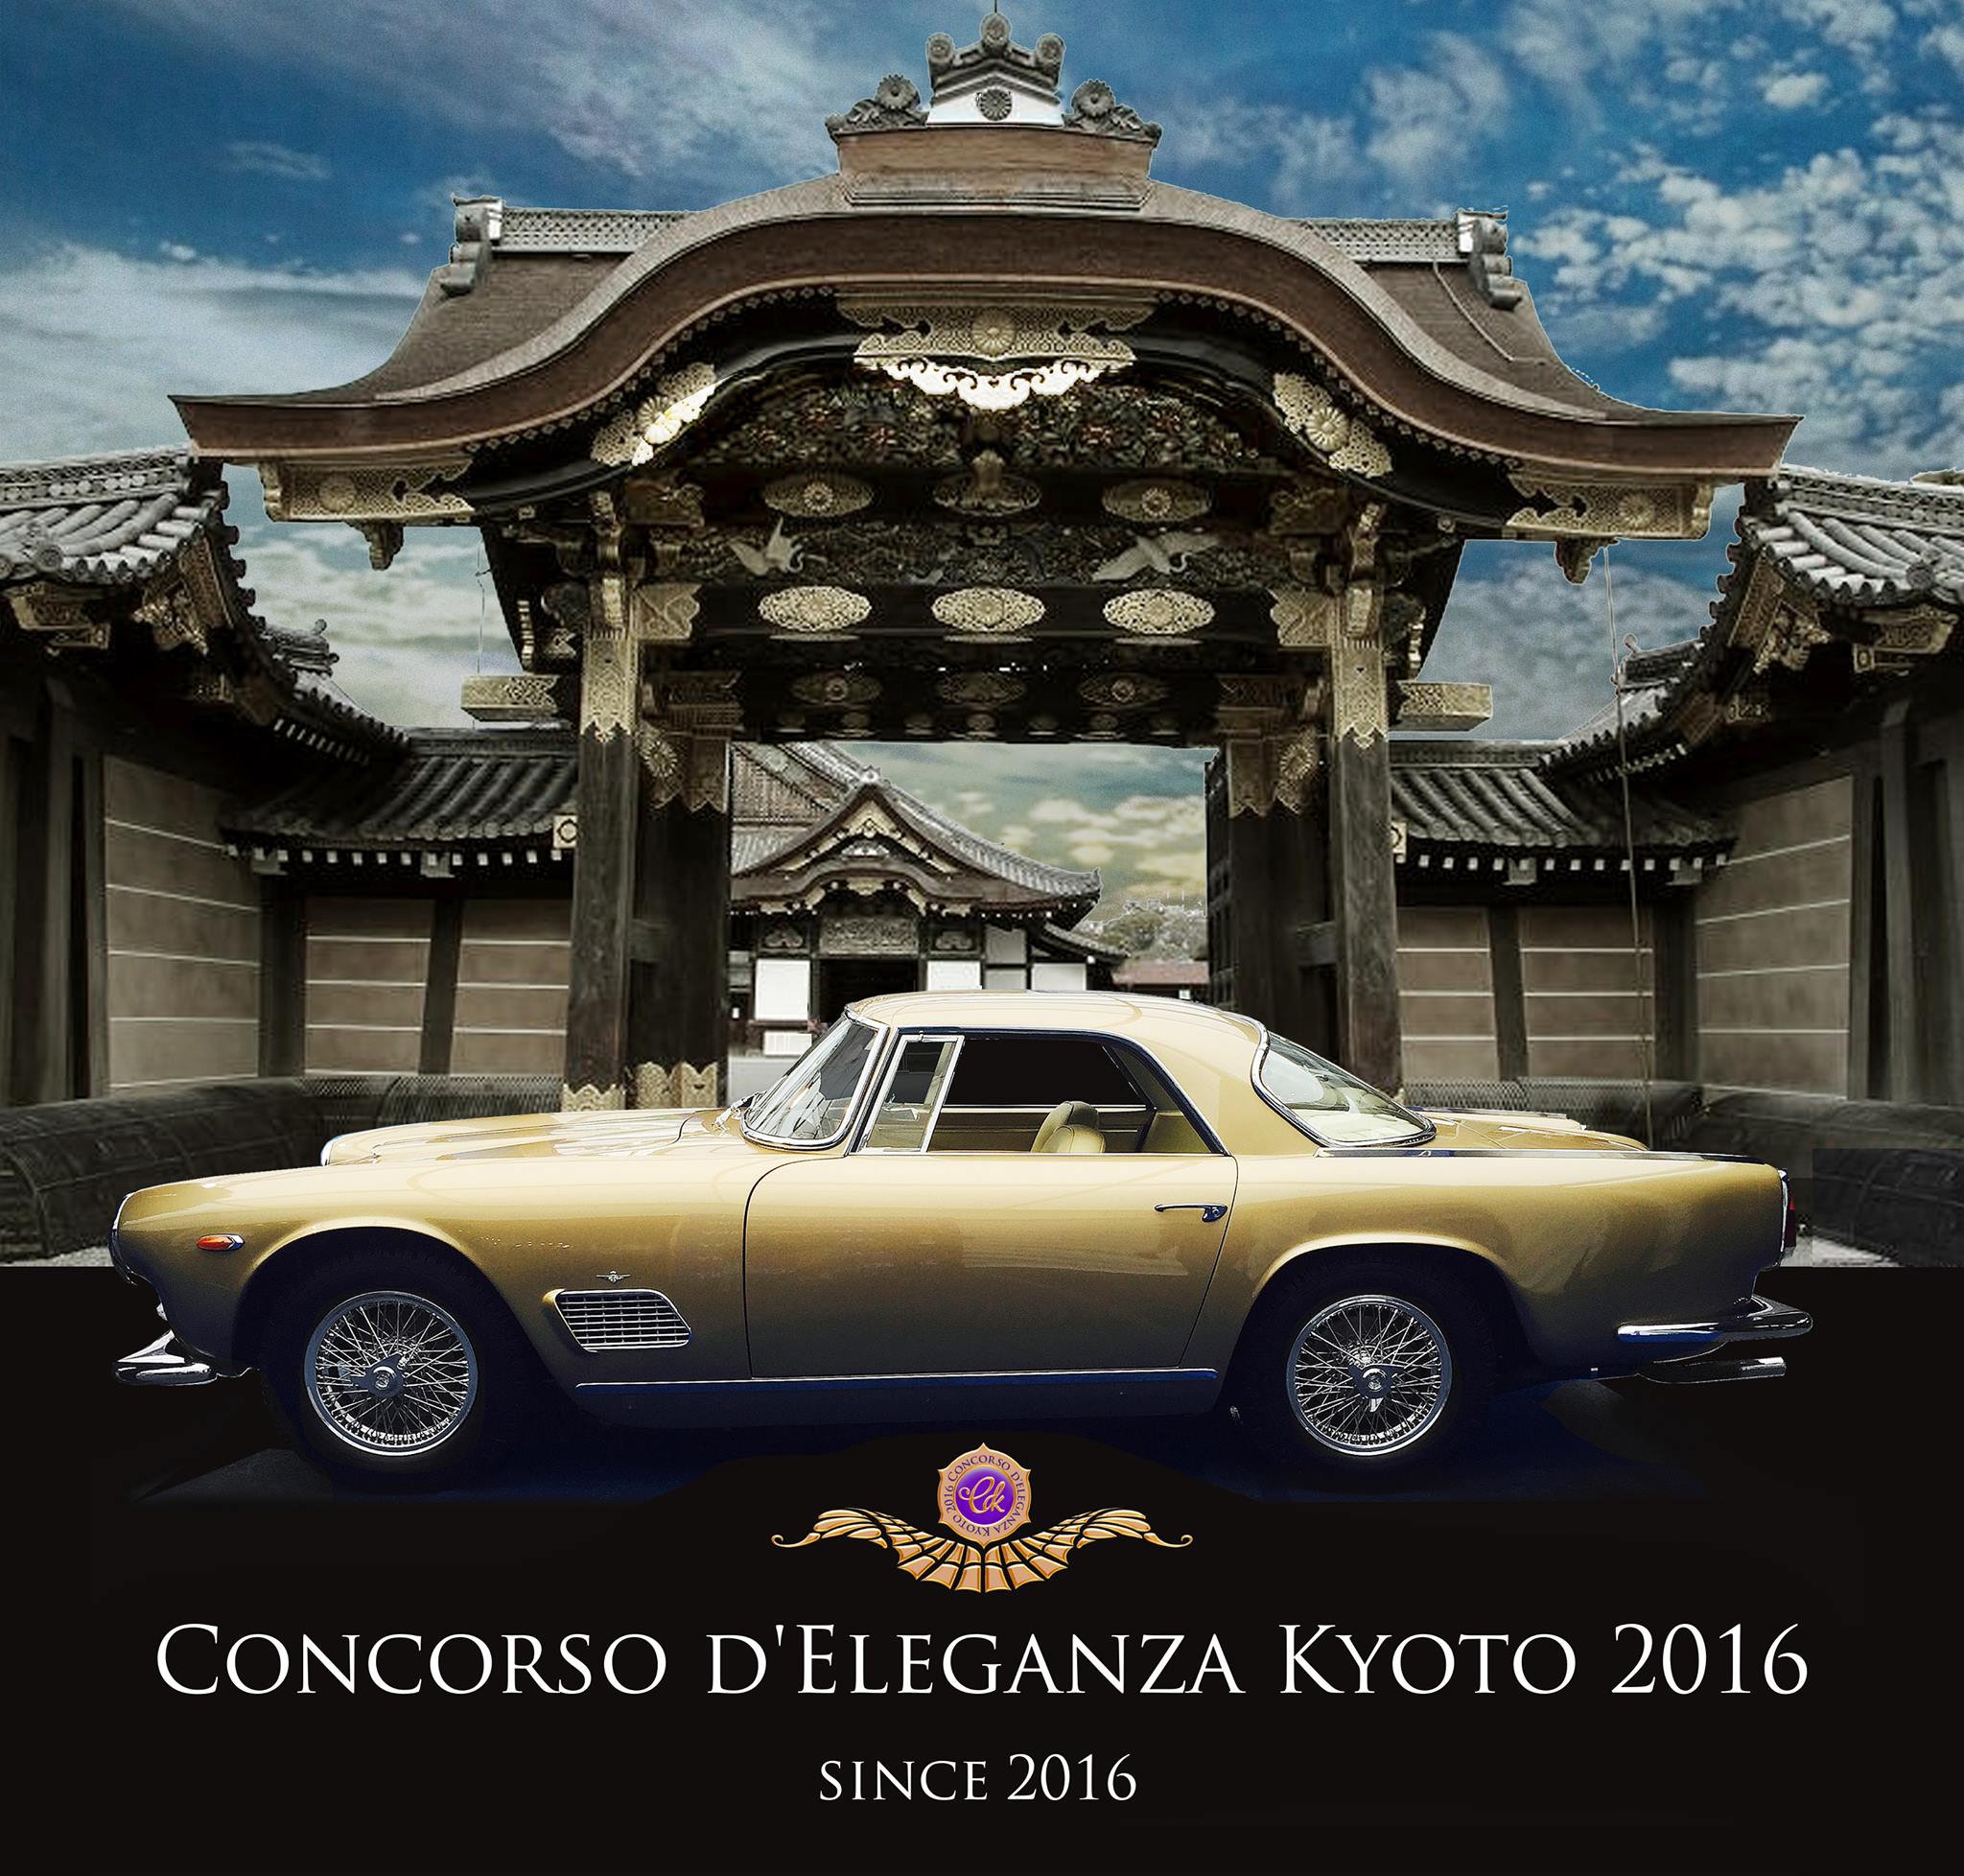 Planex Cars Concorso D Eleganza Kyoto 16 Cars Report 車全般うんちくレポート Cars Report